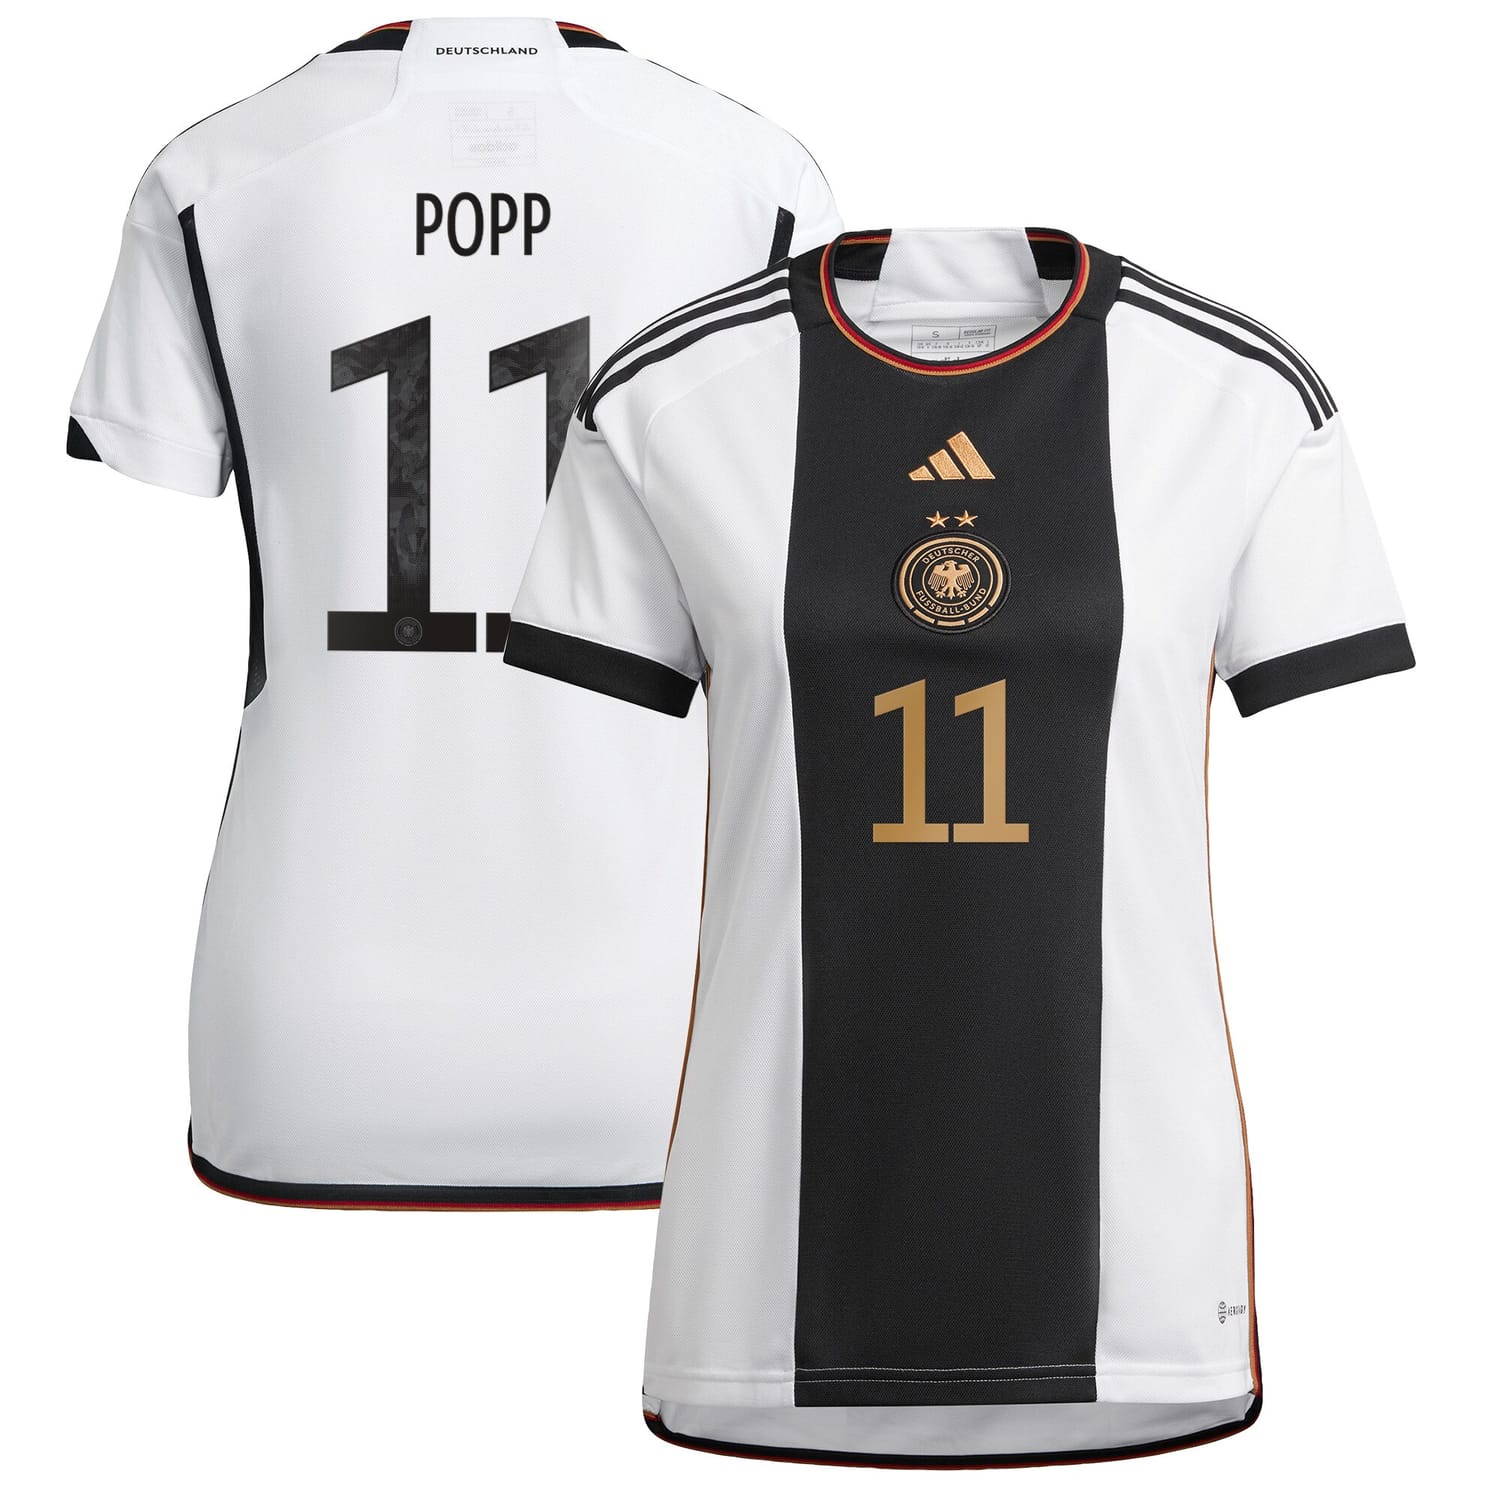 Germany National Team Home Jersey Shirt player Alexandra Popp 11 printing for Women